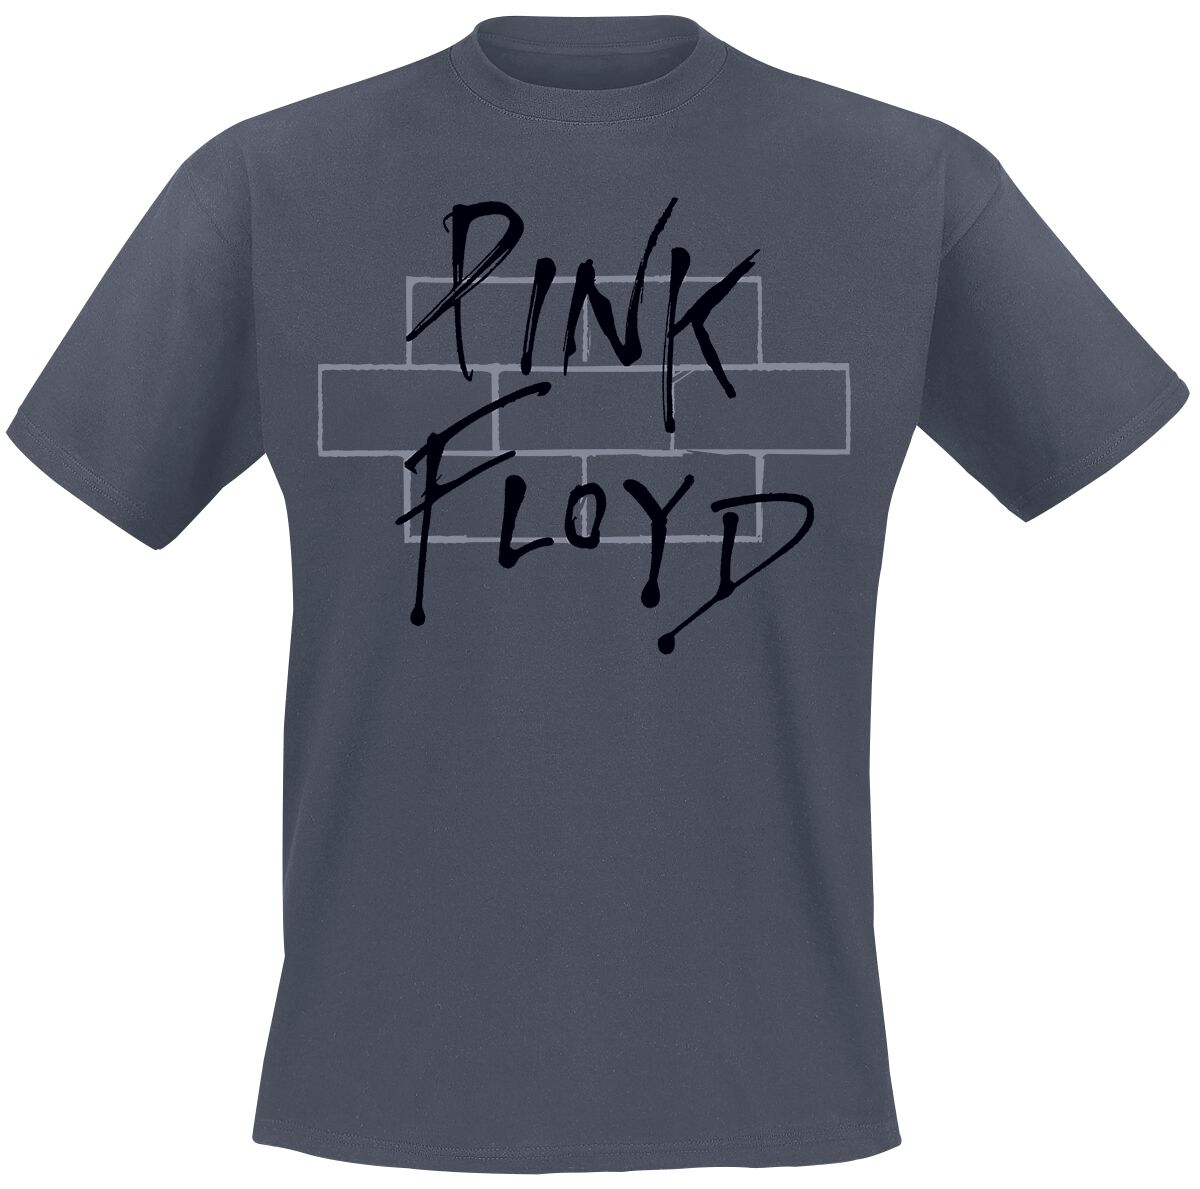 The Wall T-Shirt dunkelgrau von Pink Floyd